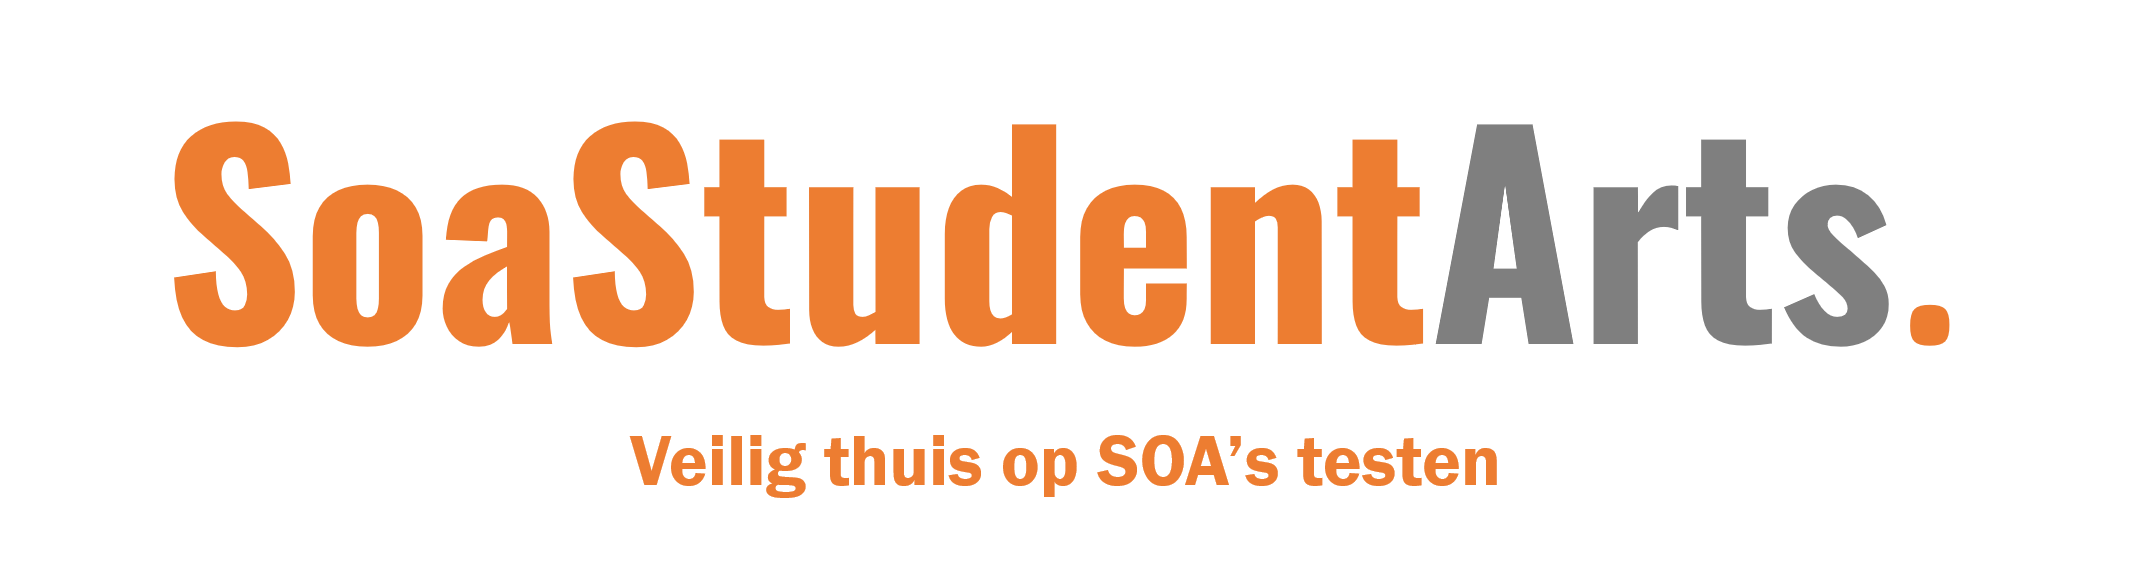 SoaStudentArts - Veilig thuis op SOA's testen logo